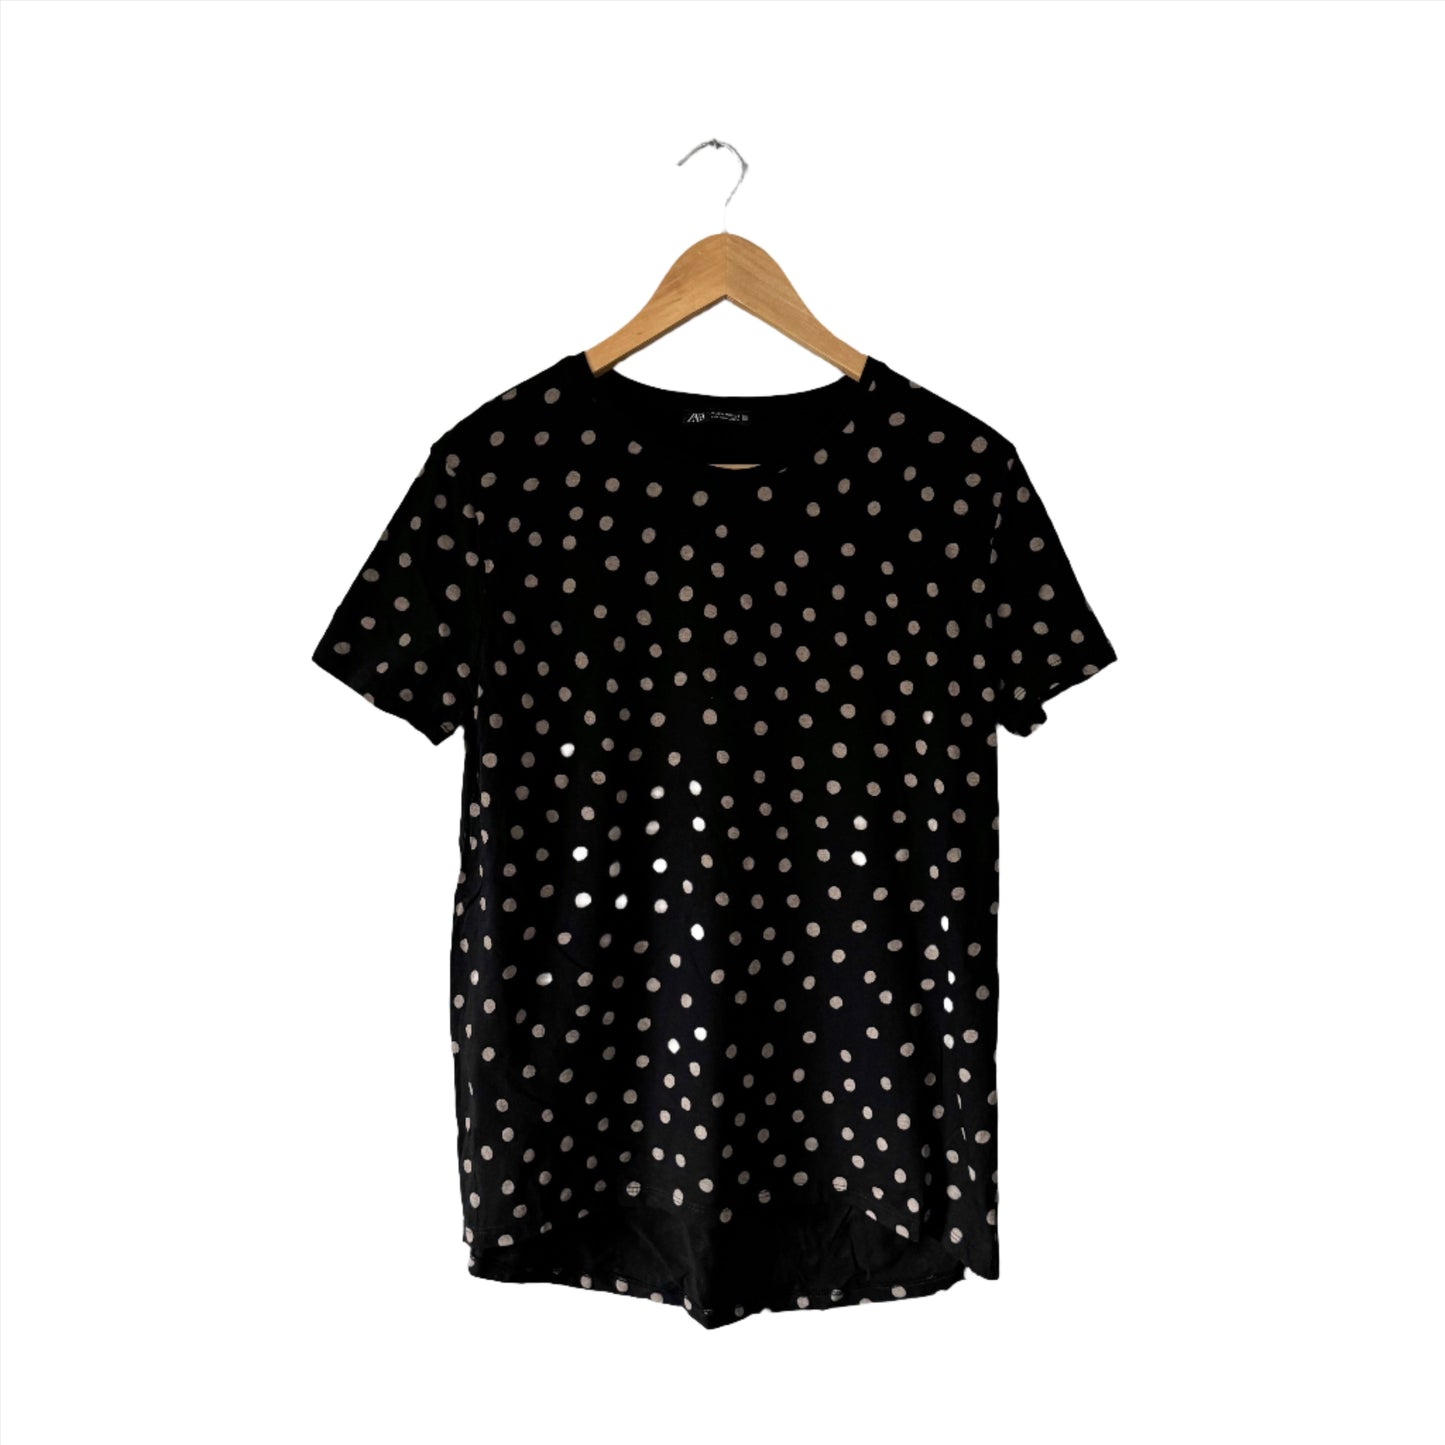 Zara / Black x dots T-shirt / Women M